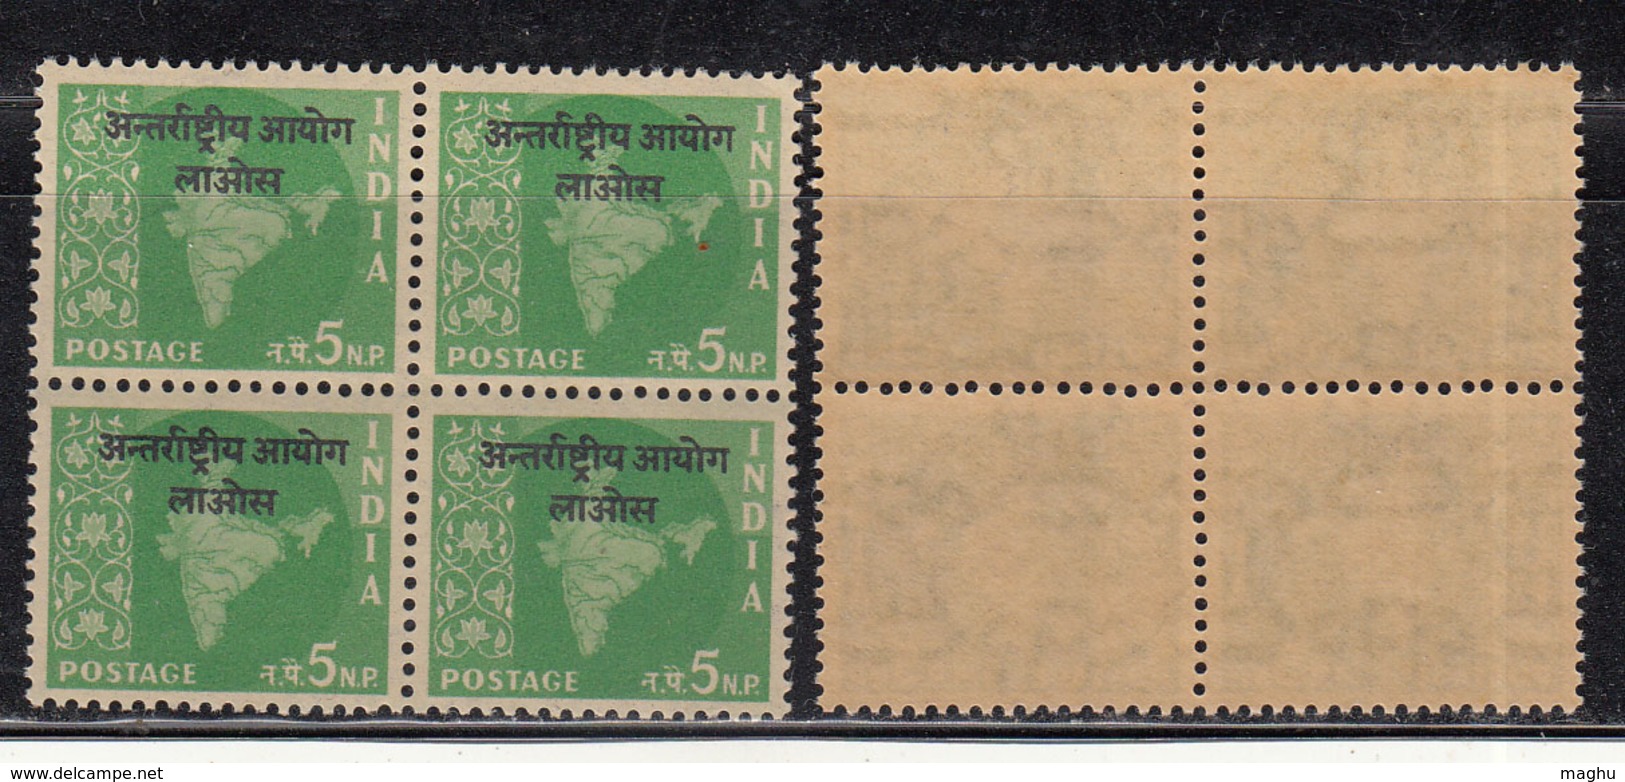 Block Of 4, 5np Ovpt Laos On Map Series,  India MNH 1962, Ashokan Watermark, - Military Service Stamp